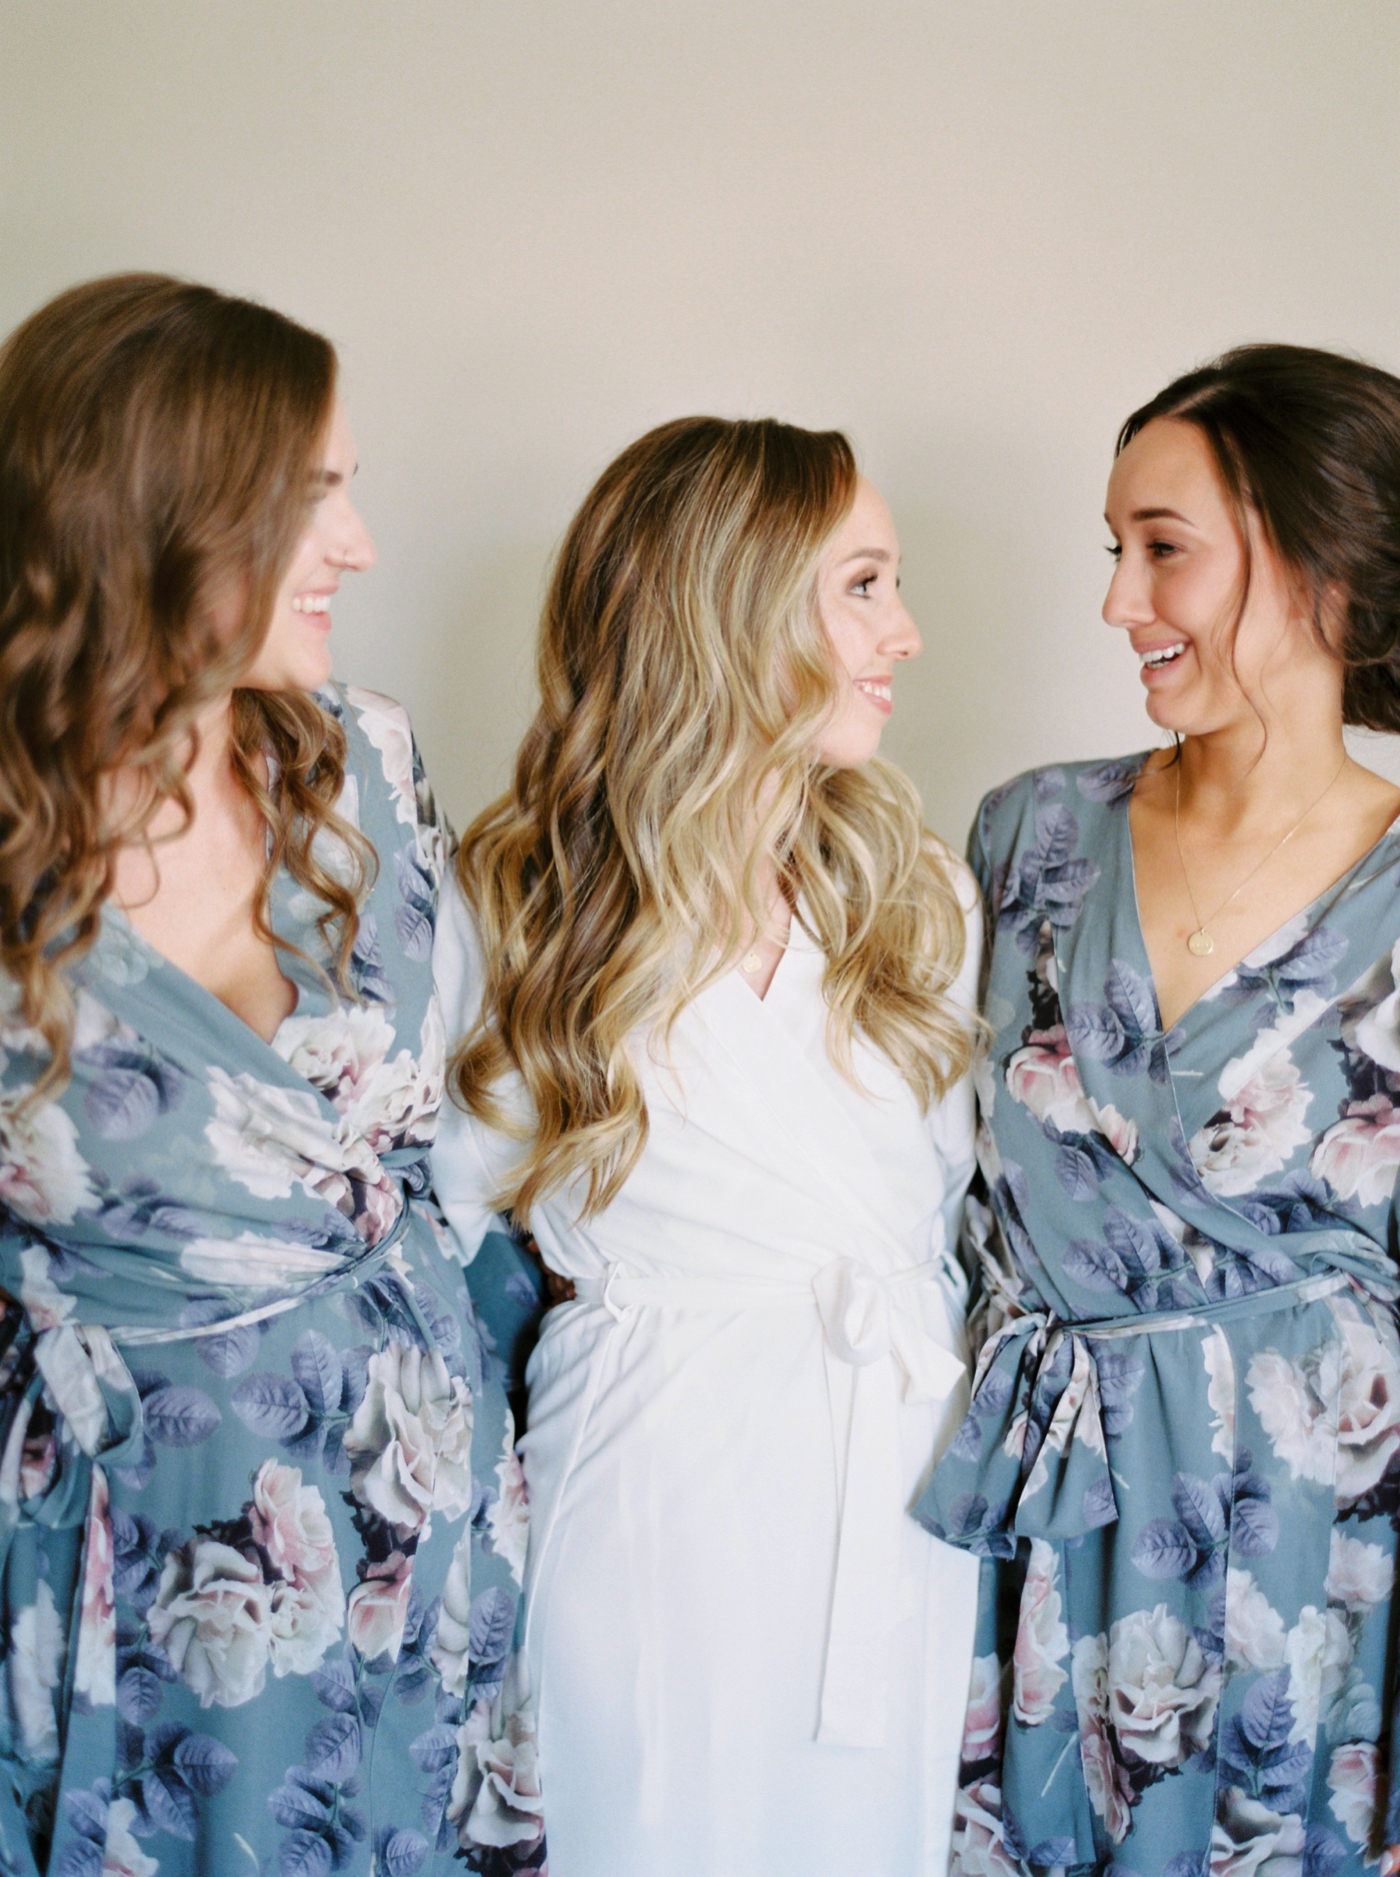 Calgary wedding photographers | The Gathered Farm Wedding | Justine milton fine art film photographer | bride getting ready bridesmaids robes